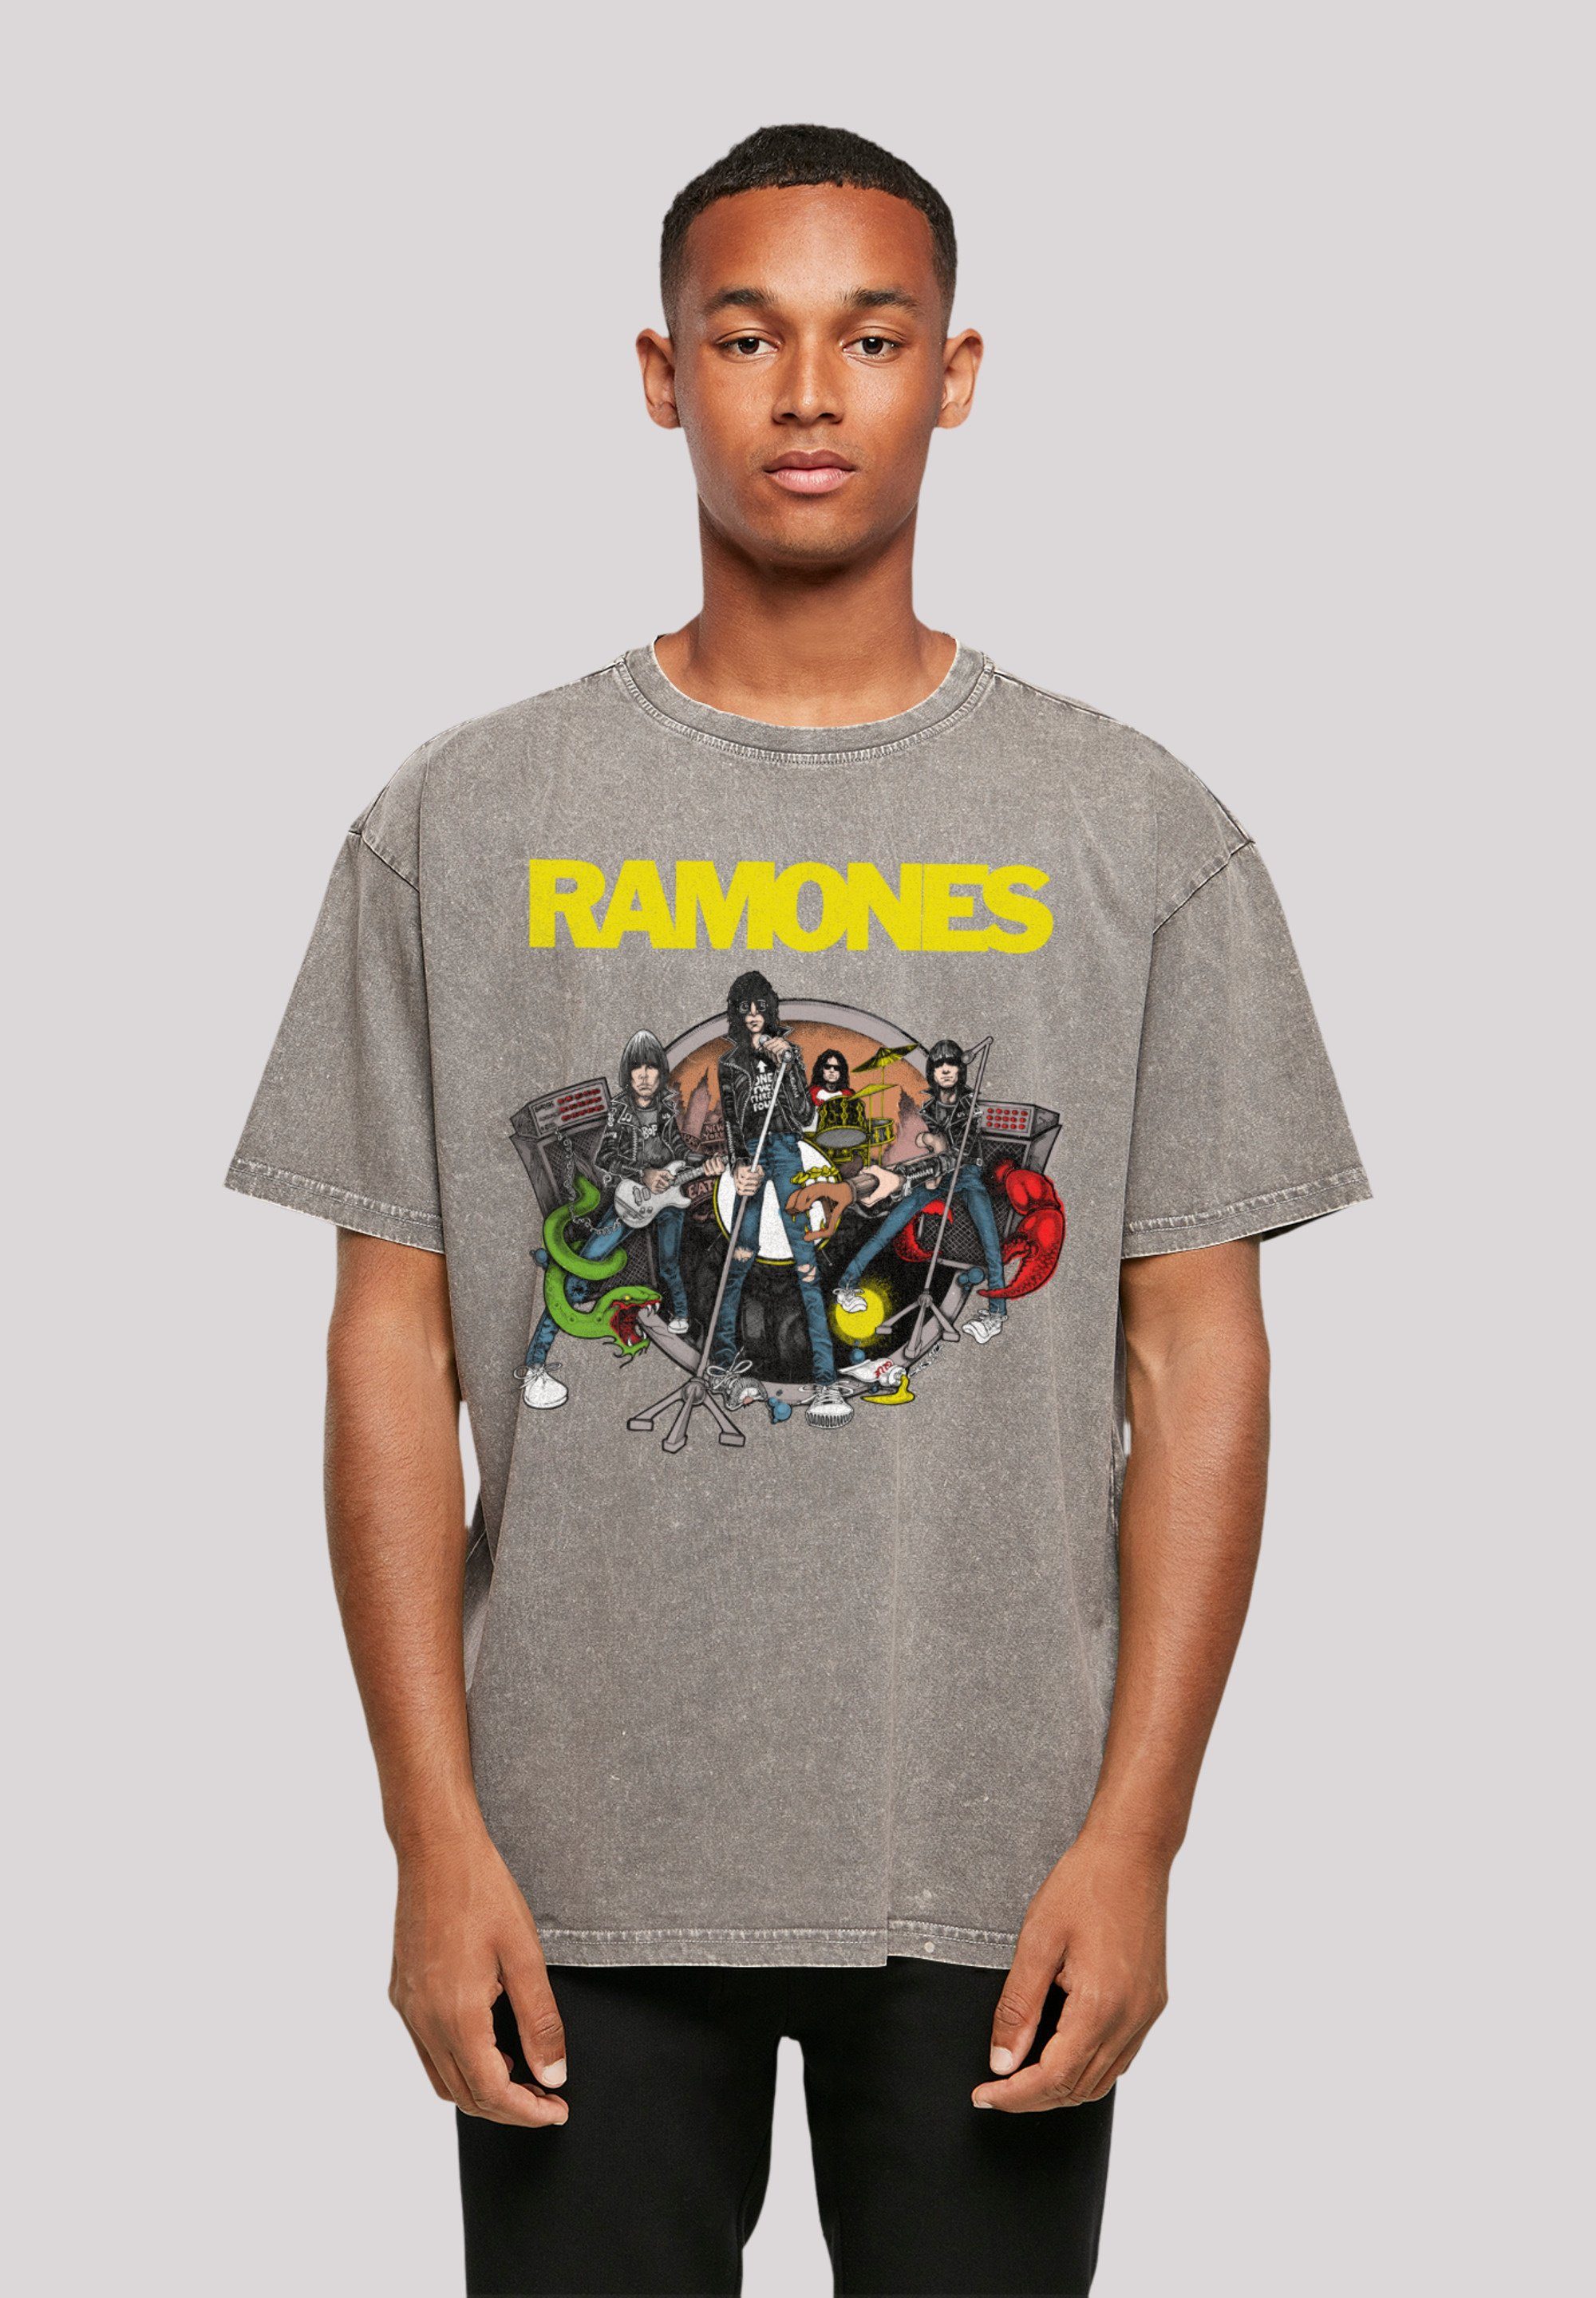 F4NT4STIC T-Shirt Ramones Rock Qualität, Premium Band Band, To Ruin Musik Asphalt Rock-Musik Road